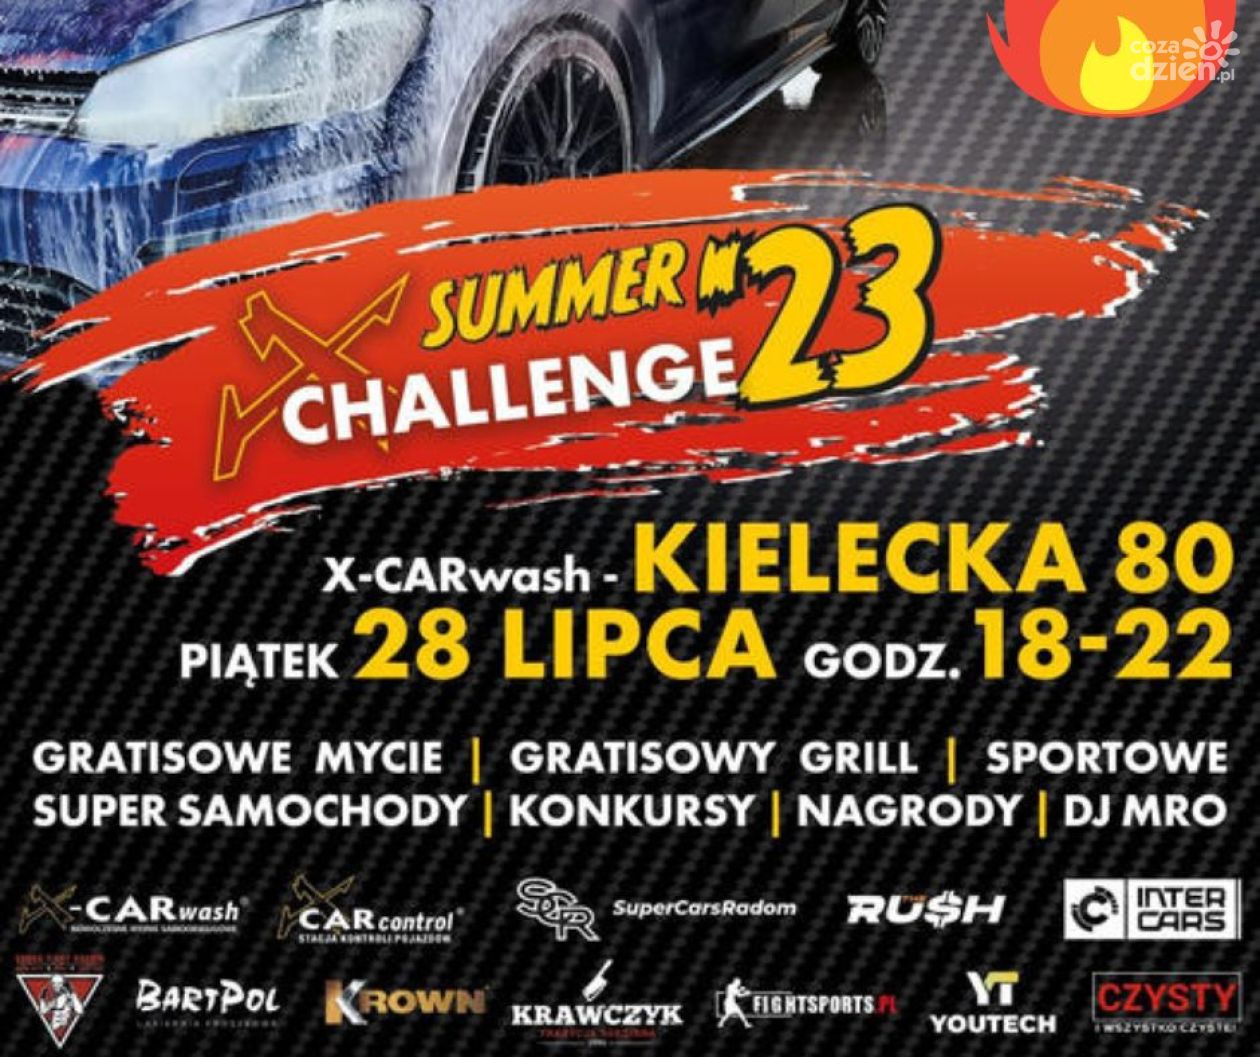 X-CARchallenge Summer 23’ już w piątek, 28 lipca